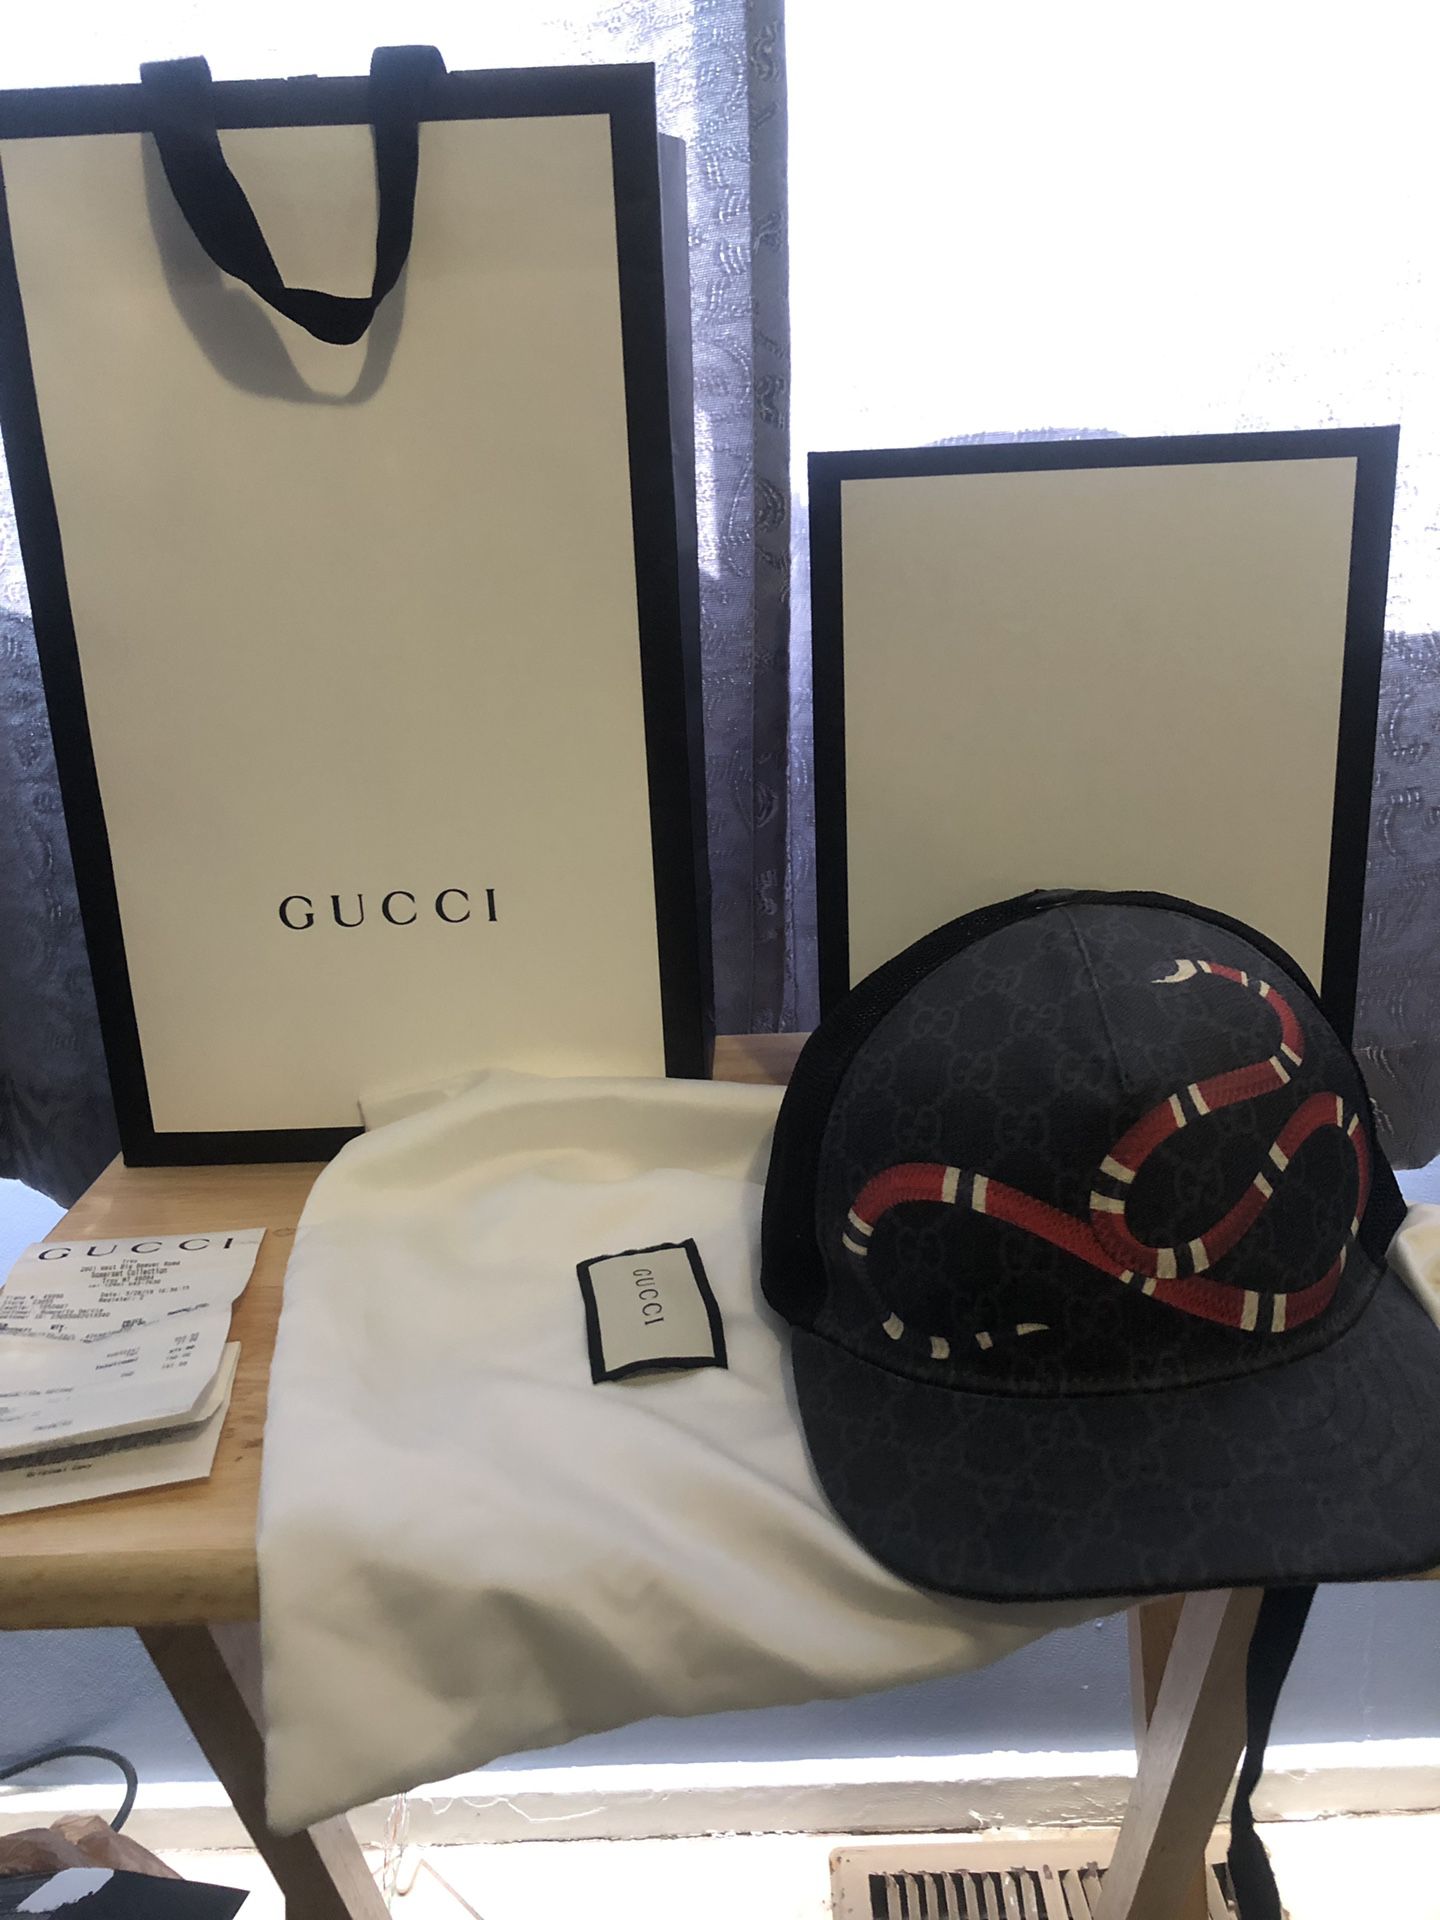 100% authentic Gucci hat